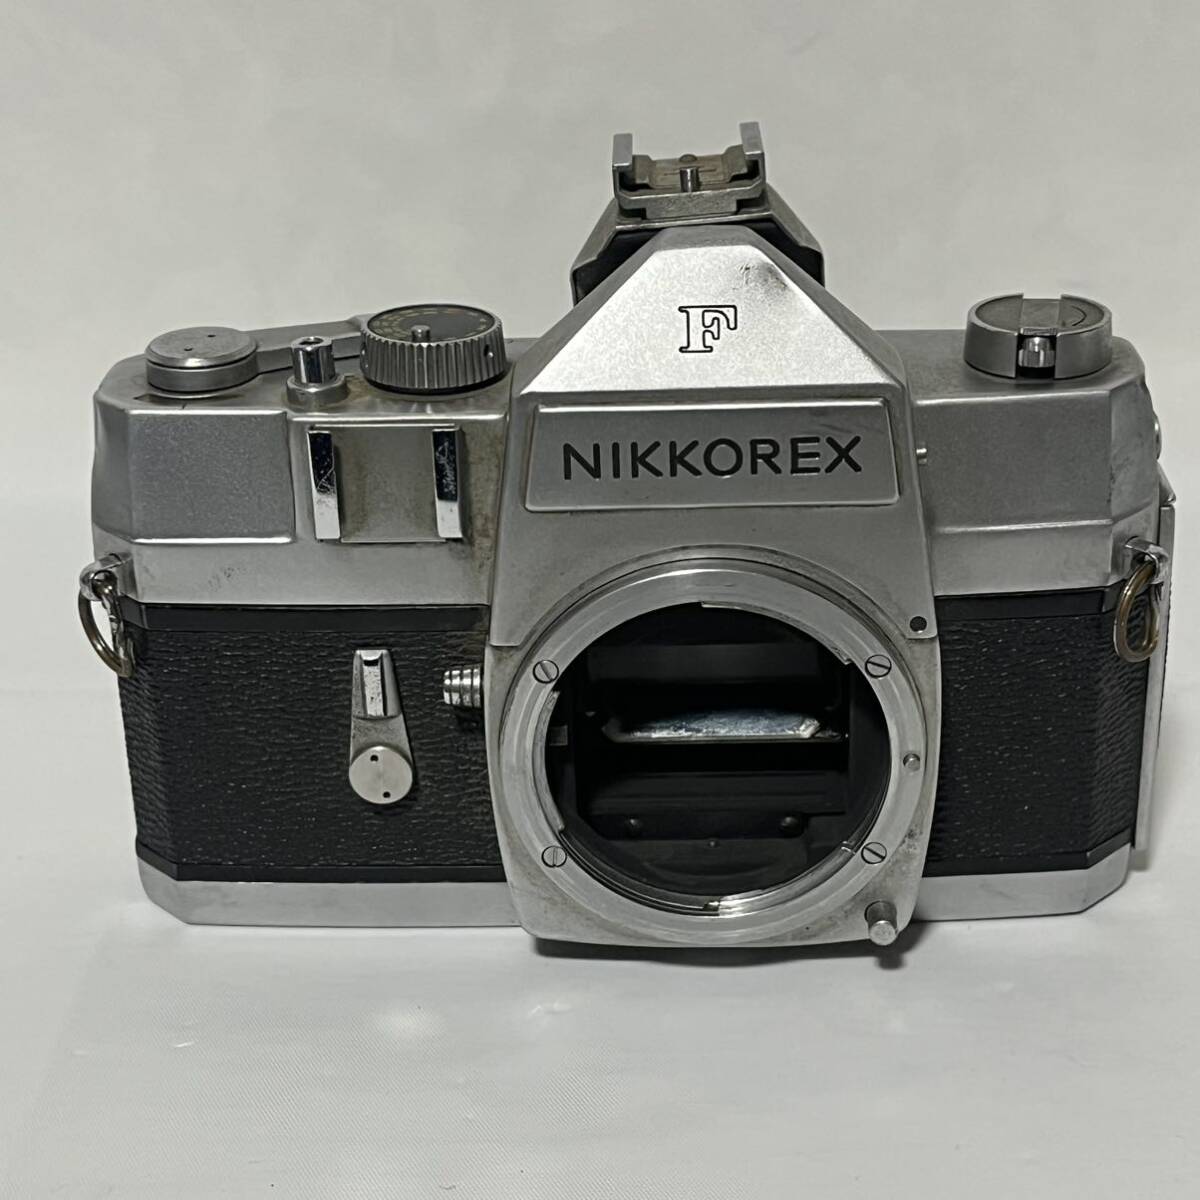  Nico Rex F NIKKOREX F body Nikon Nikon shutter only verification operation not yet verification junk 